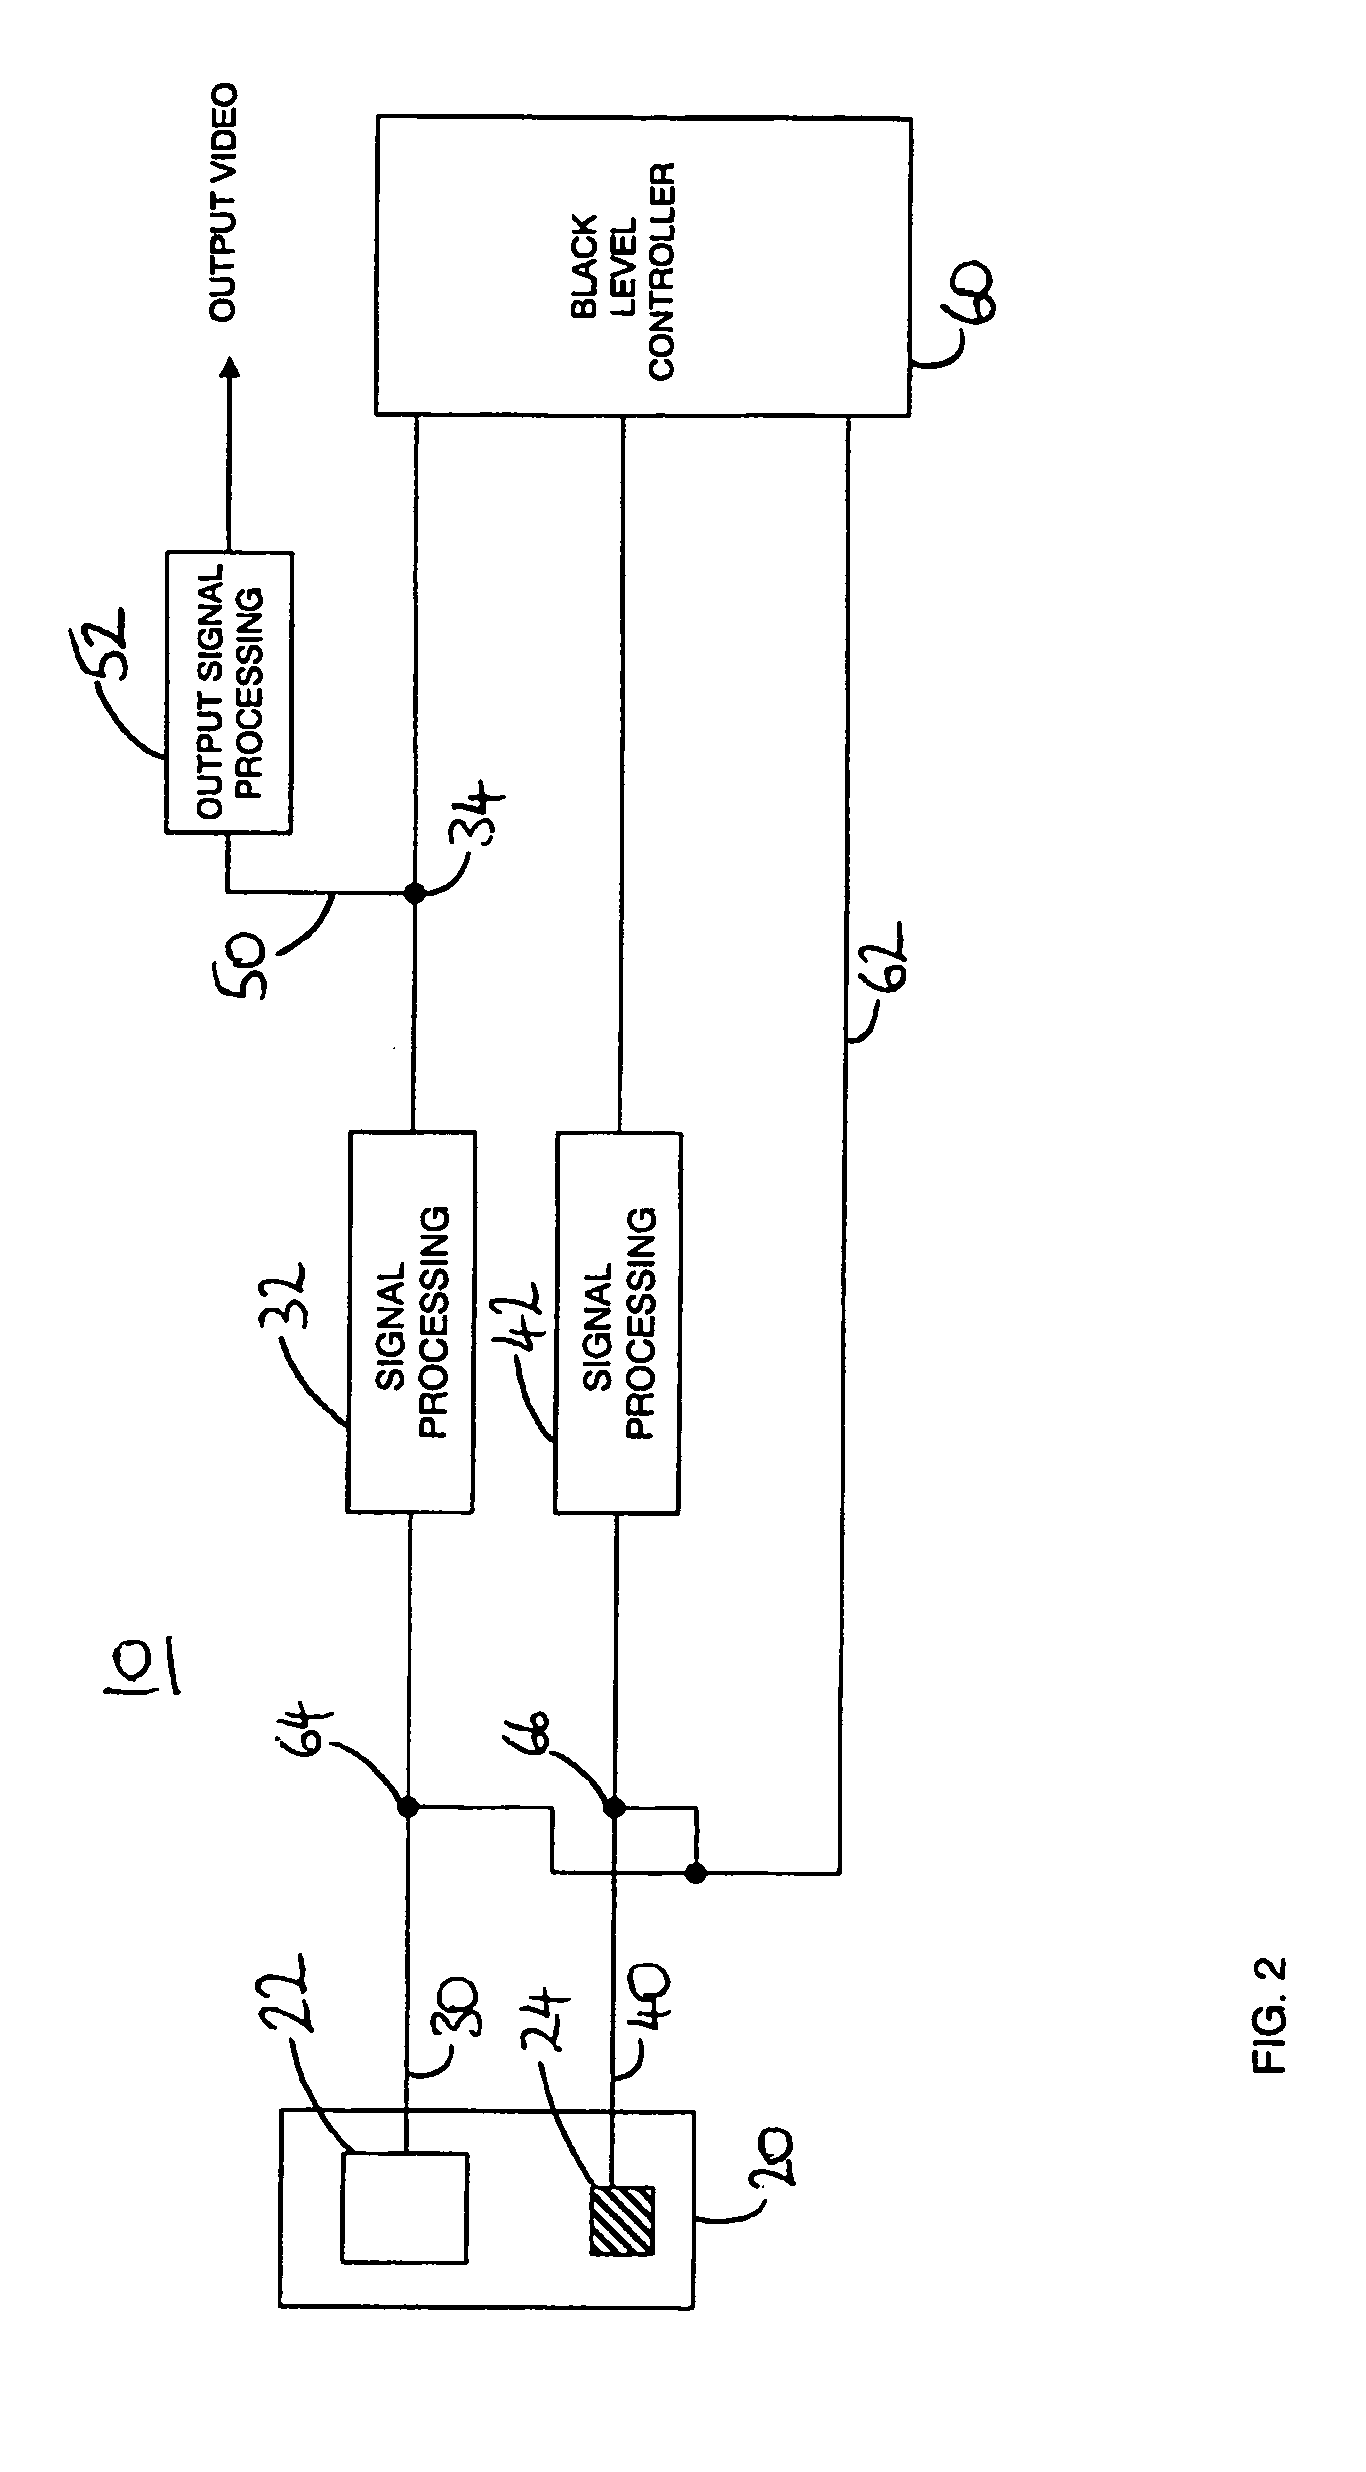 Black level control apparatus and method